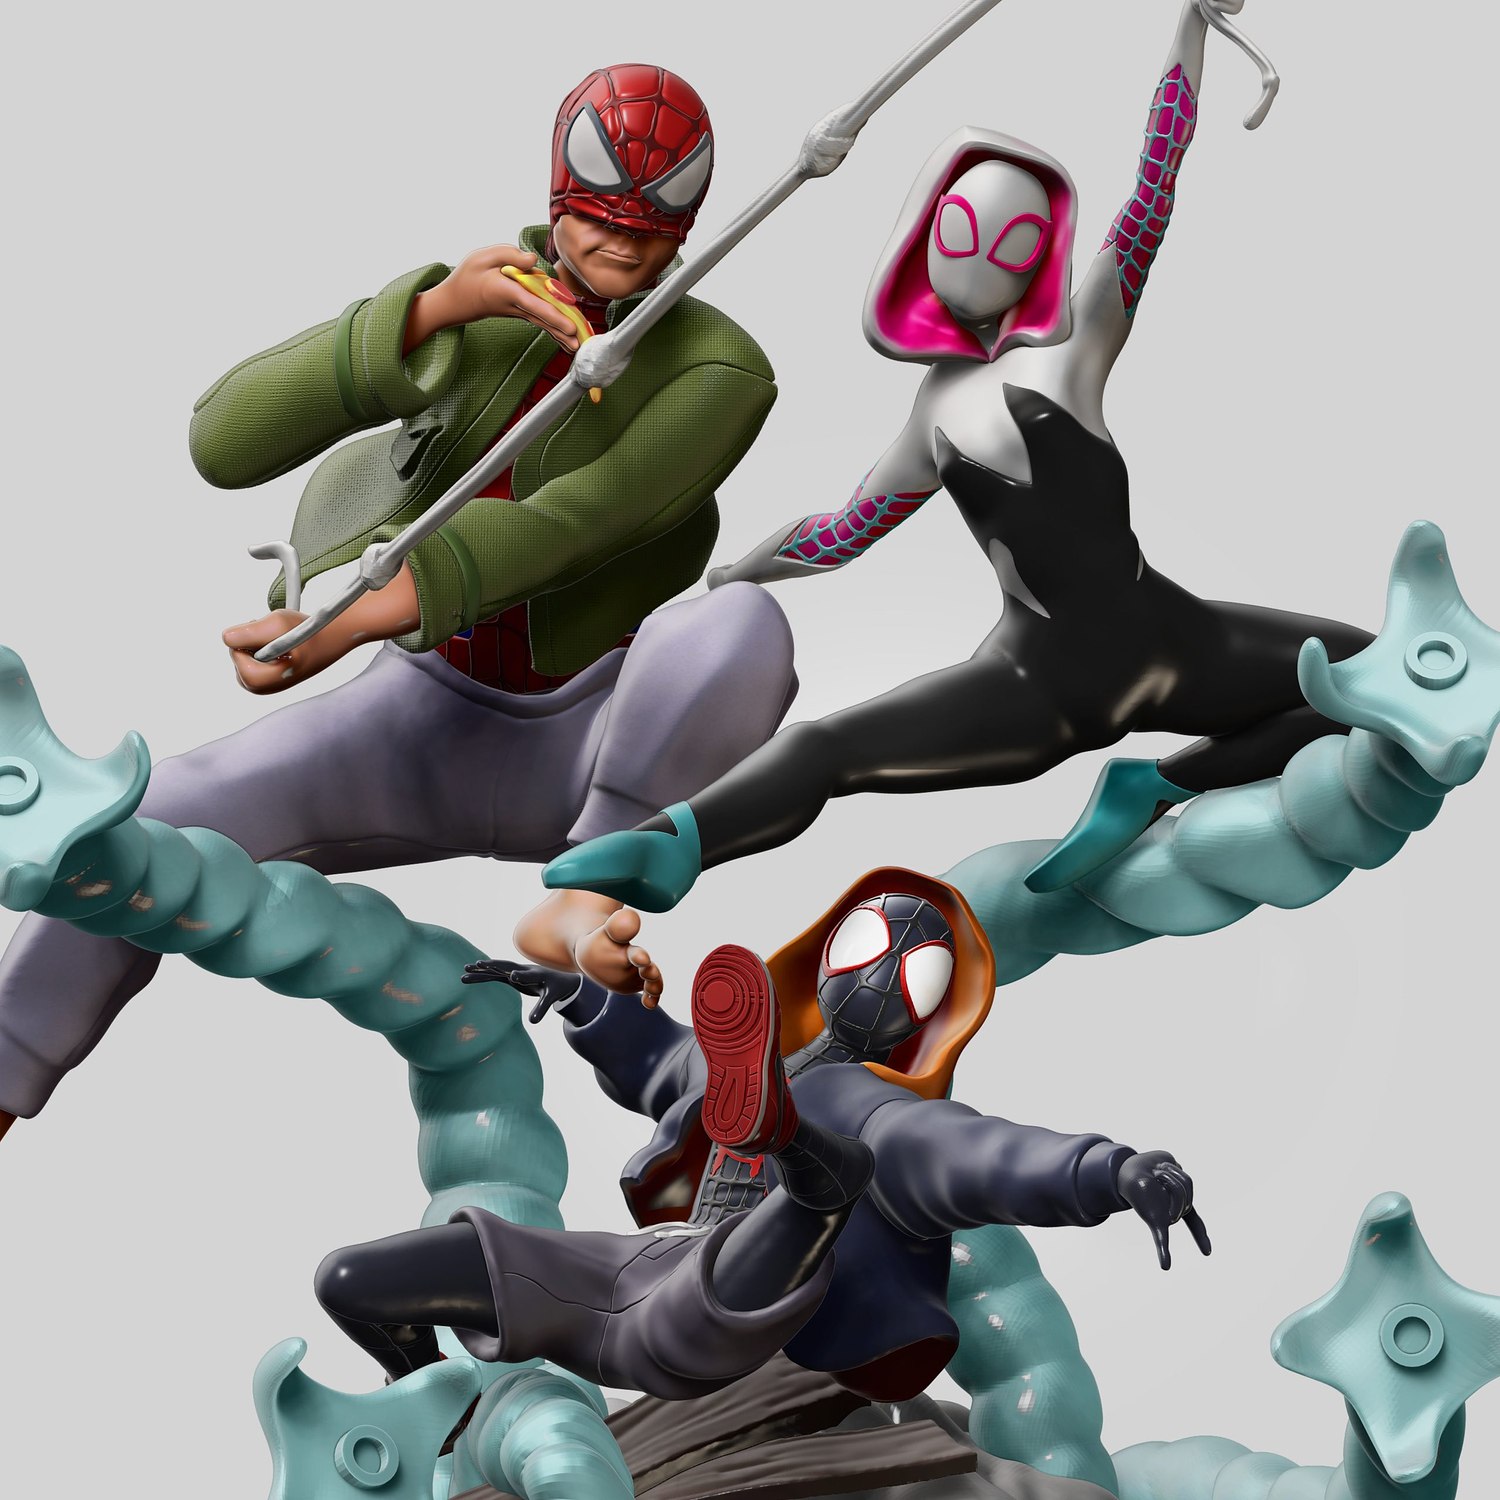 Spiderman Multiverse Diorama